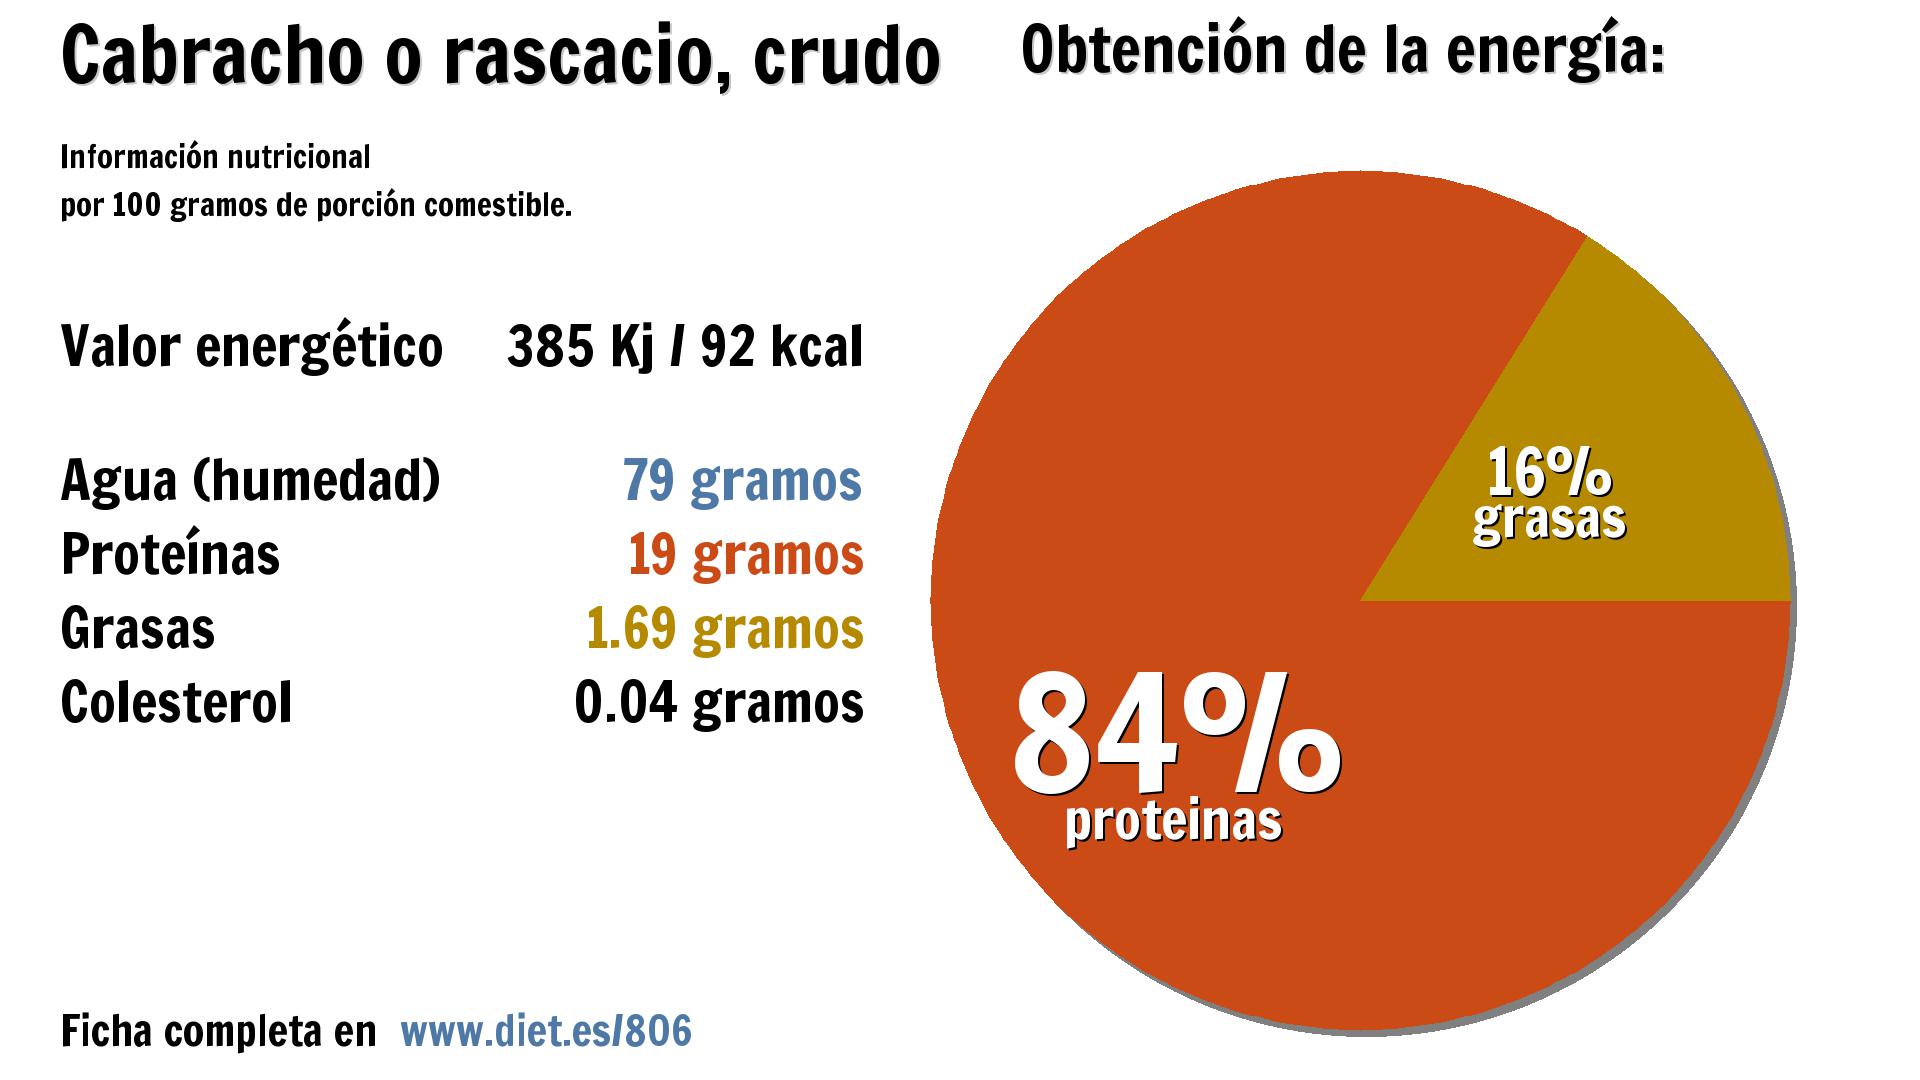 Cabracho o rascacio, crudo: energía 385 Kj, agua 79 g., proteínas 19 g. y grasas 2 g.